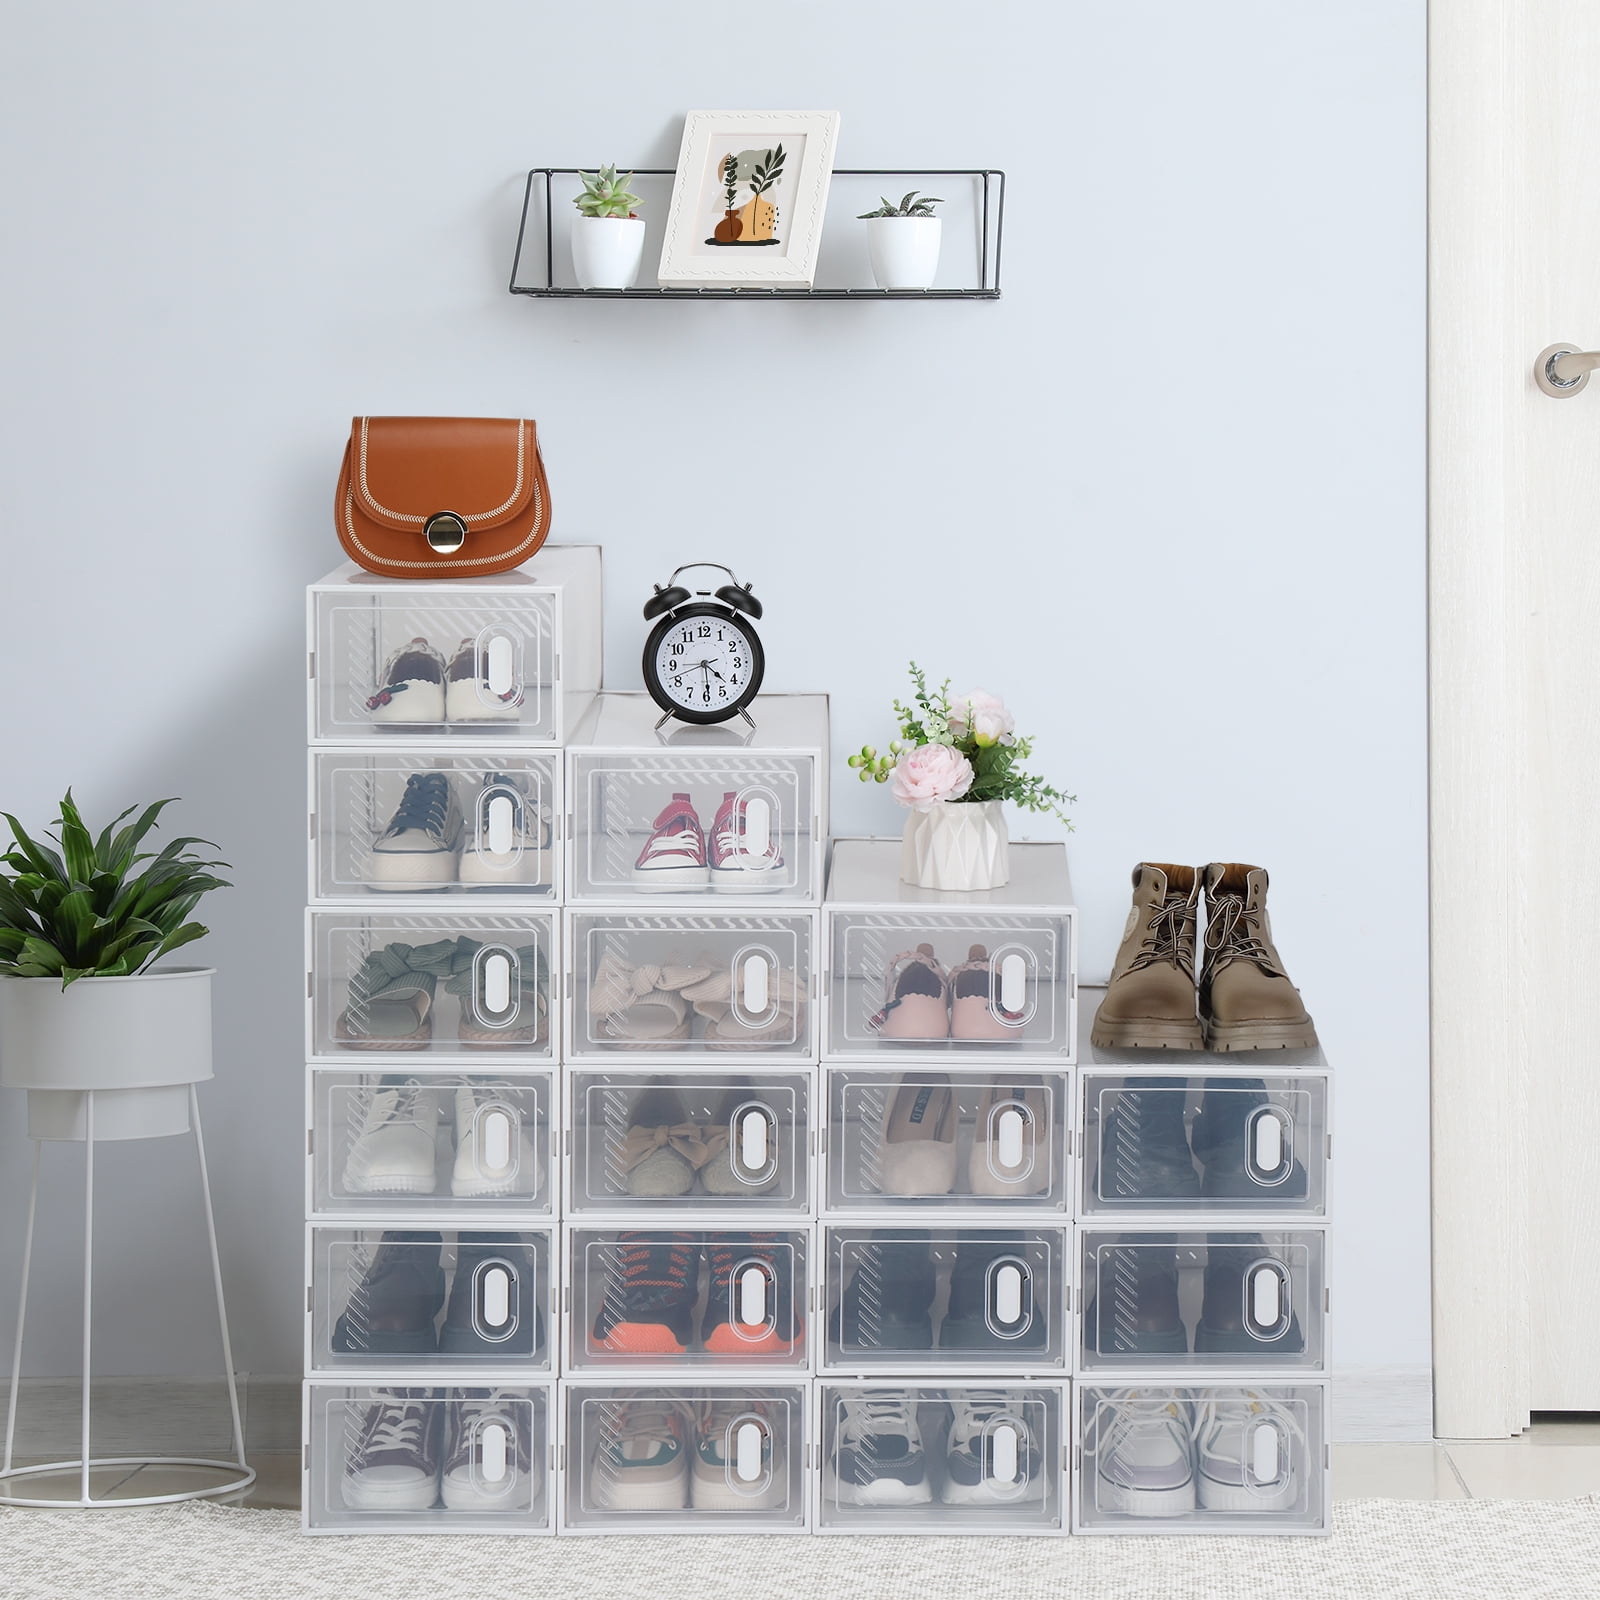  9 Packs Stackable Storage Organizer for Closet